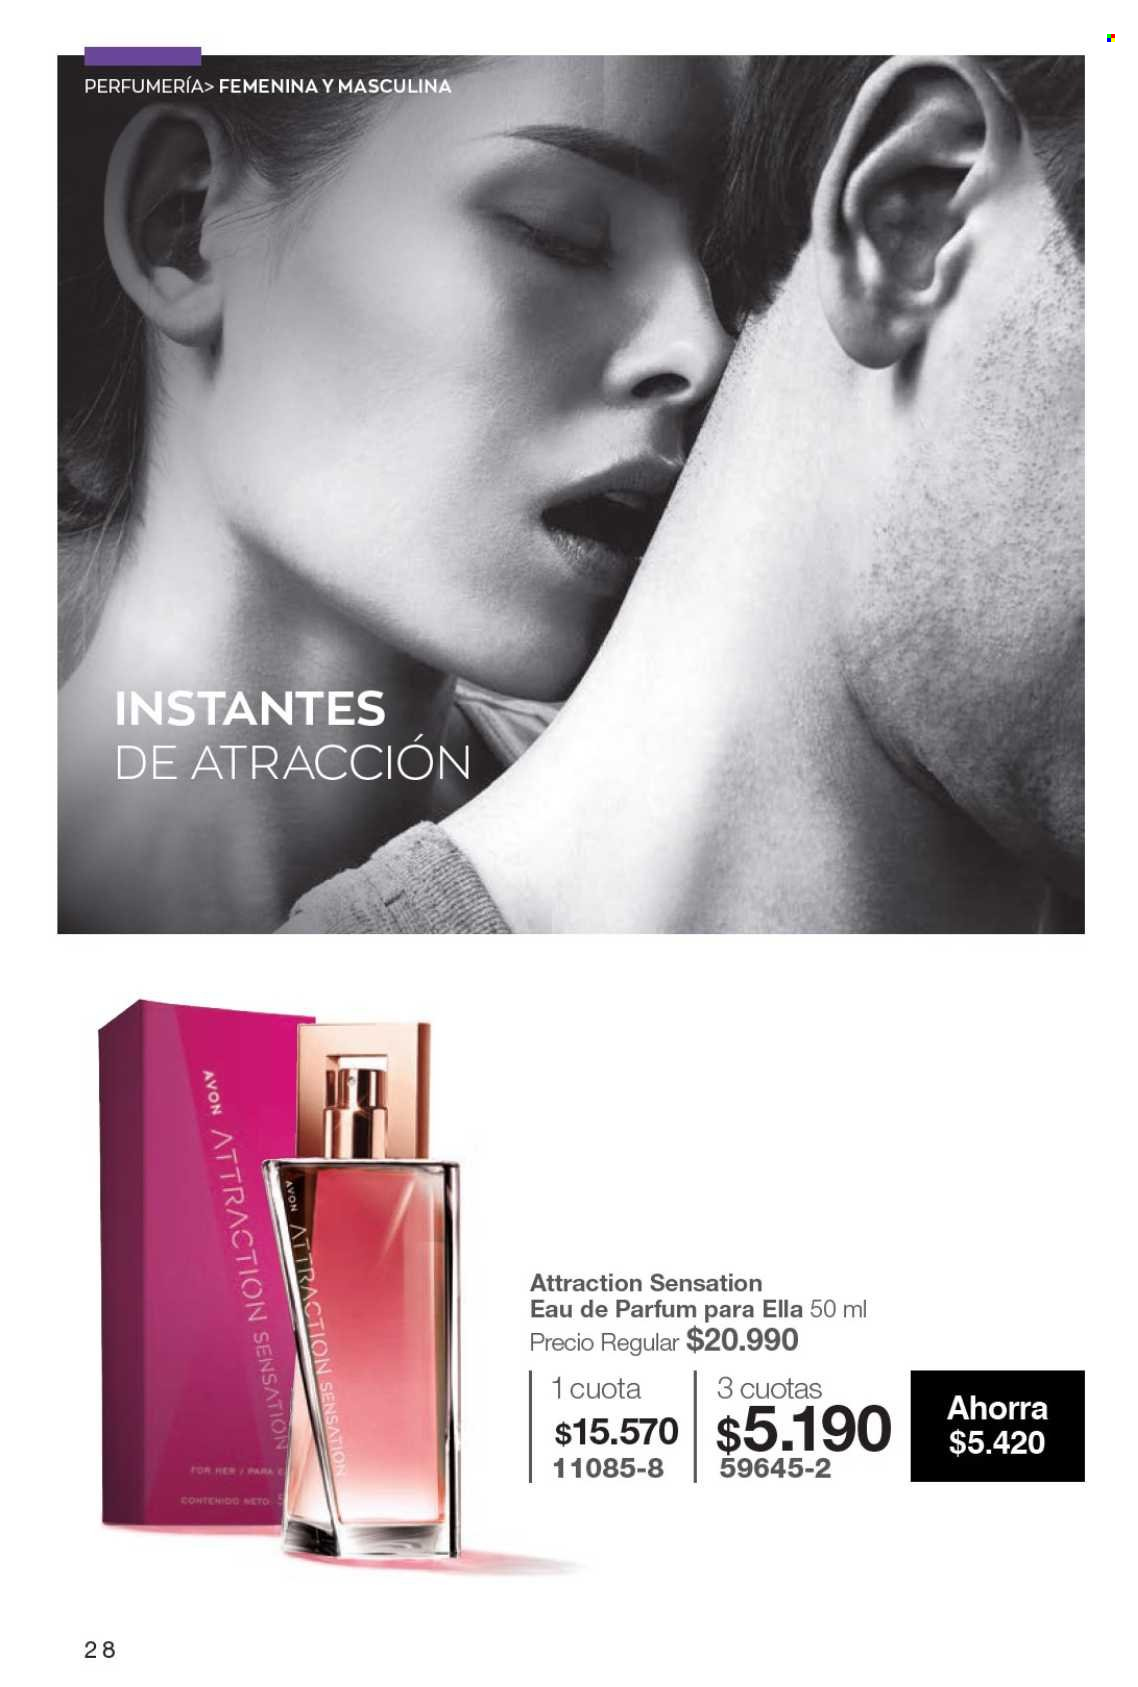 Catálogo Avon - Ventas - perfume. Página 28.